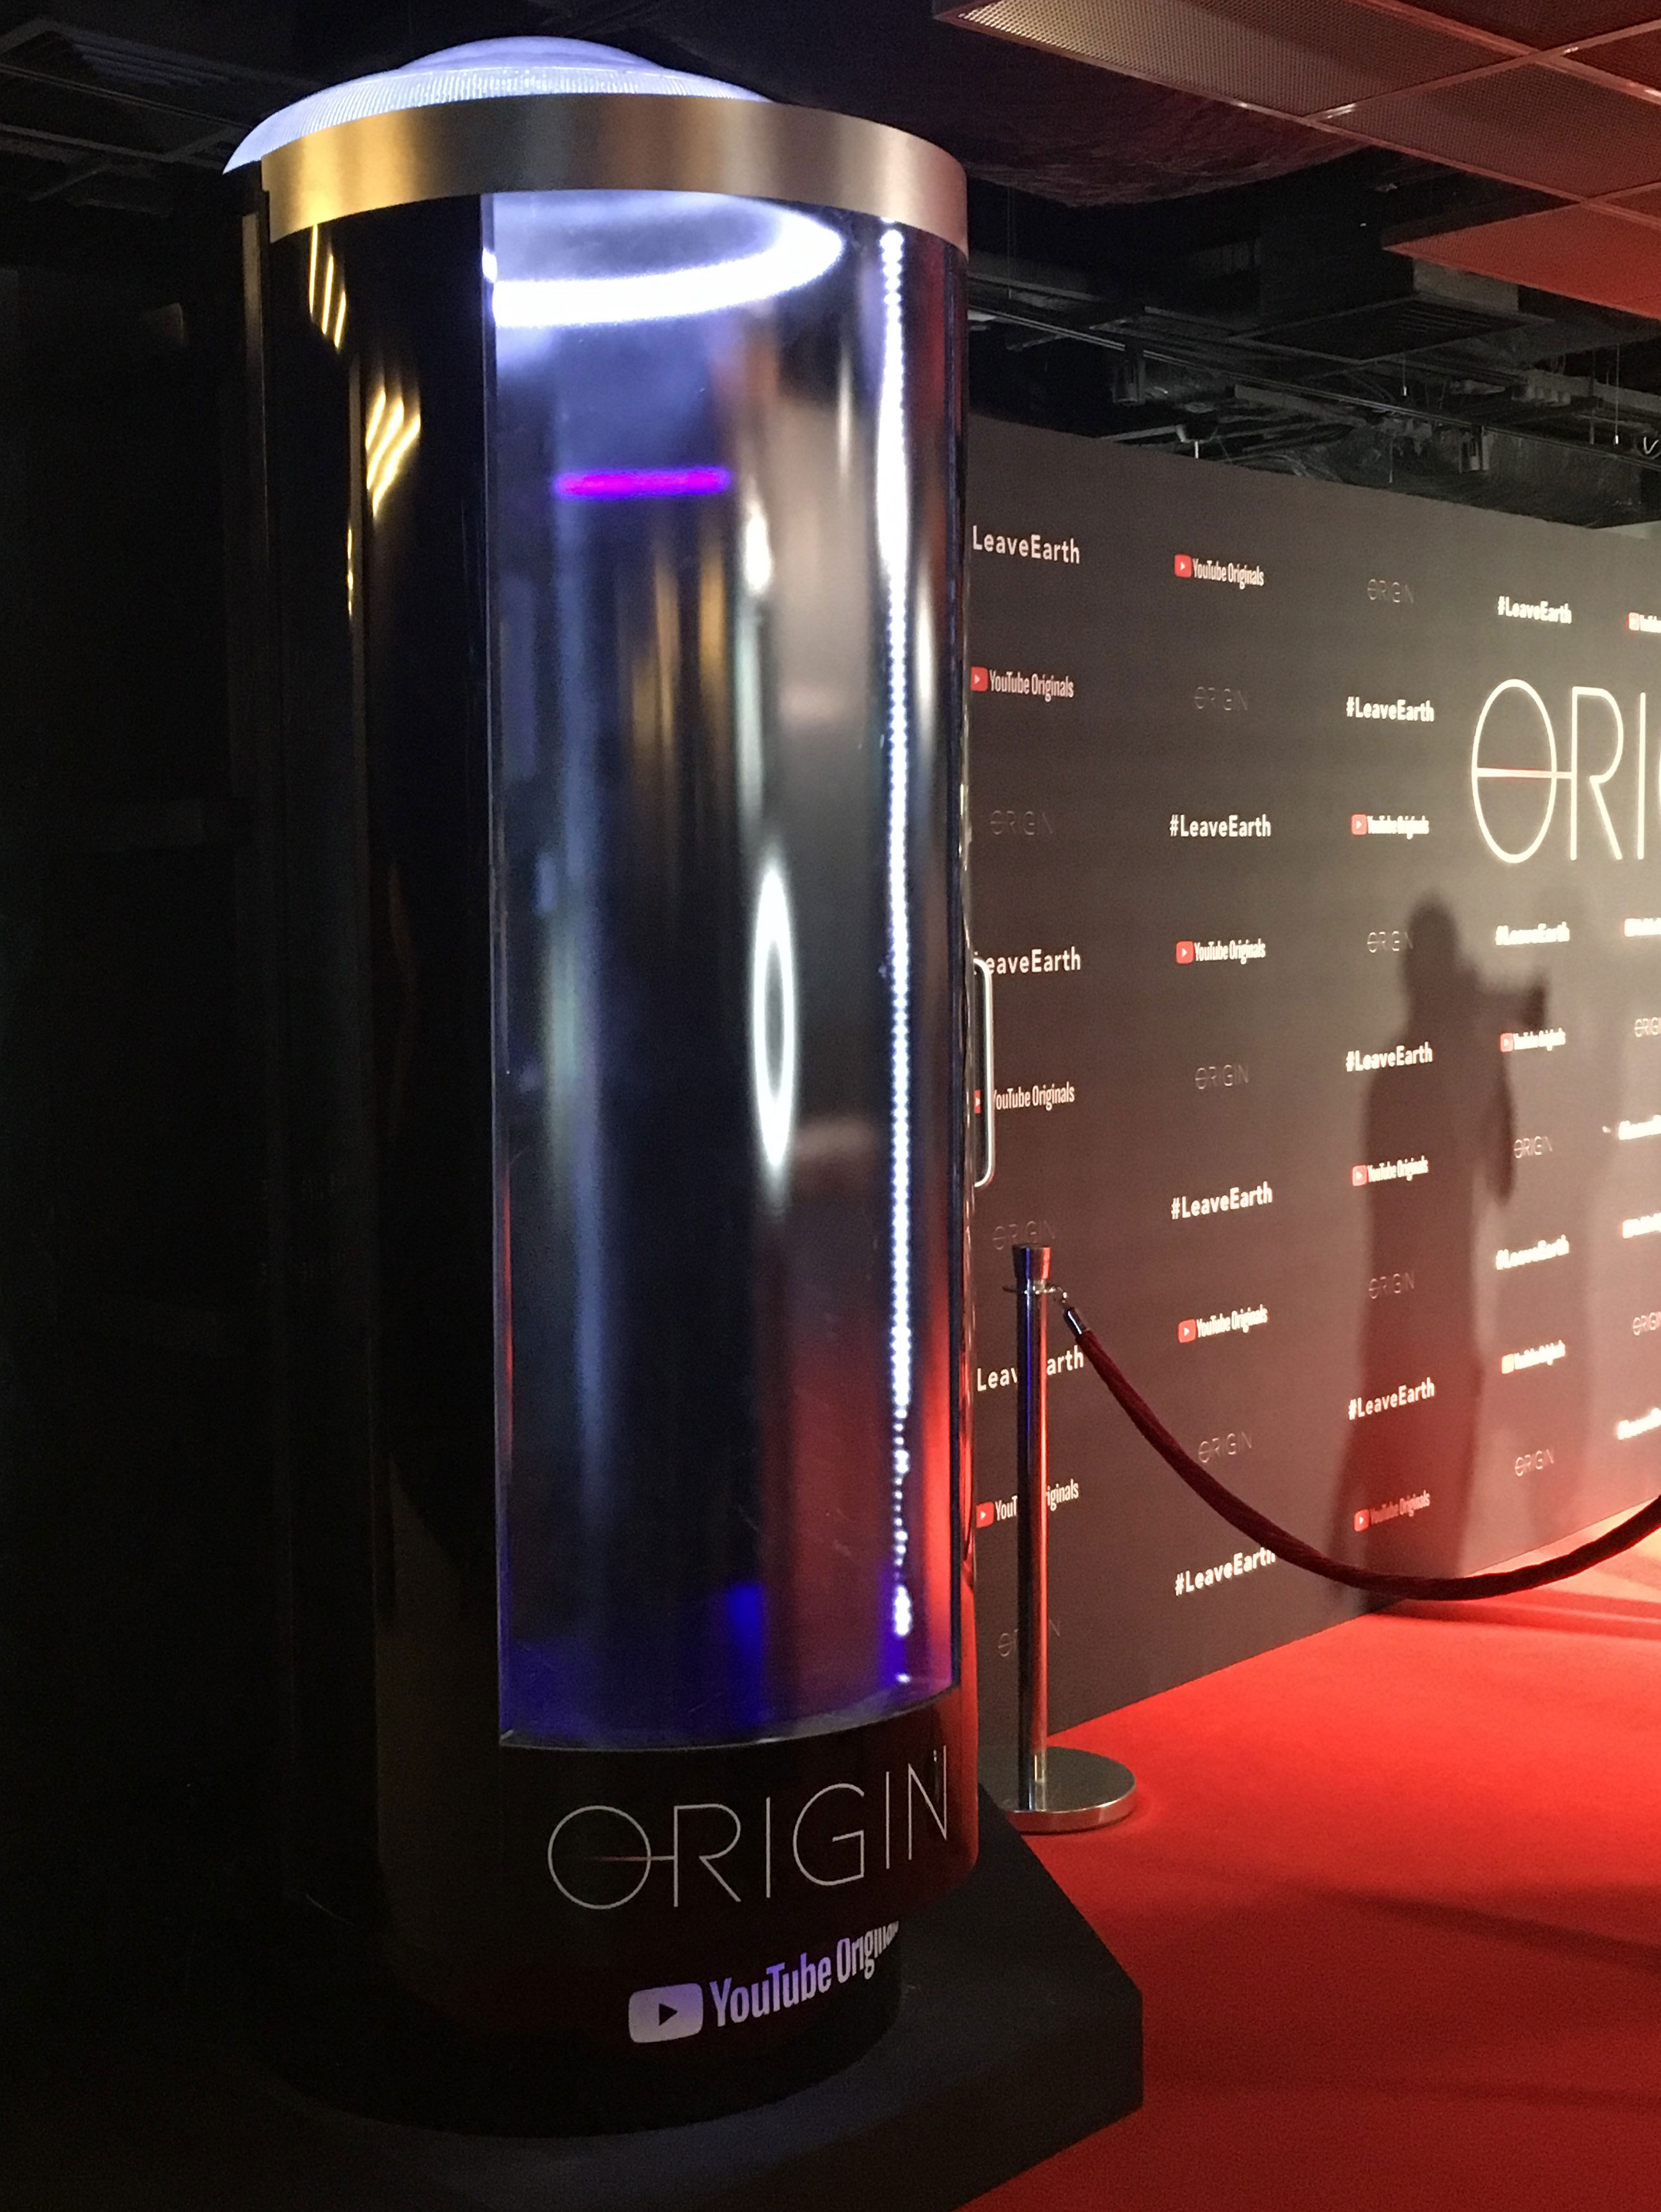 Passenger cryochamber photobooth at the “Origin” series premiere